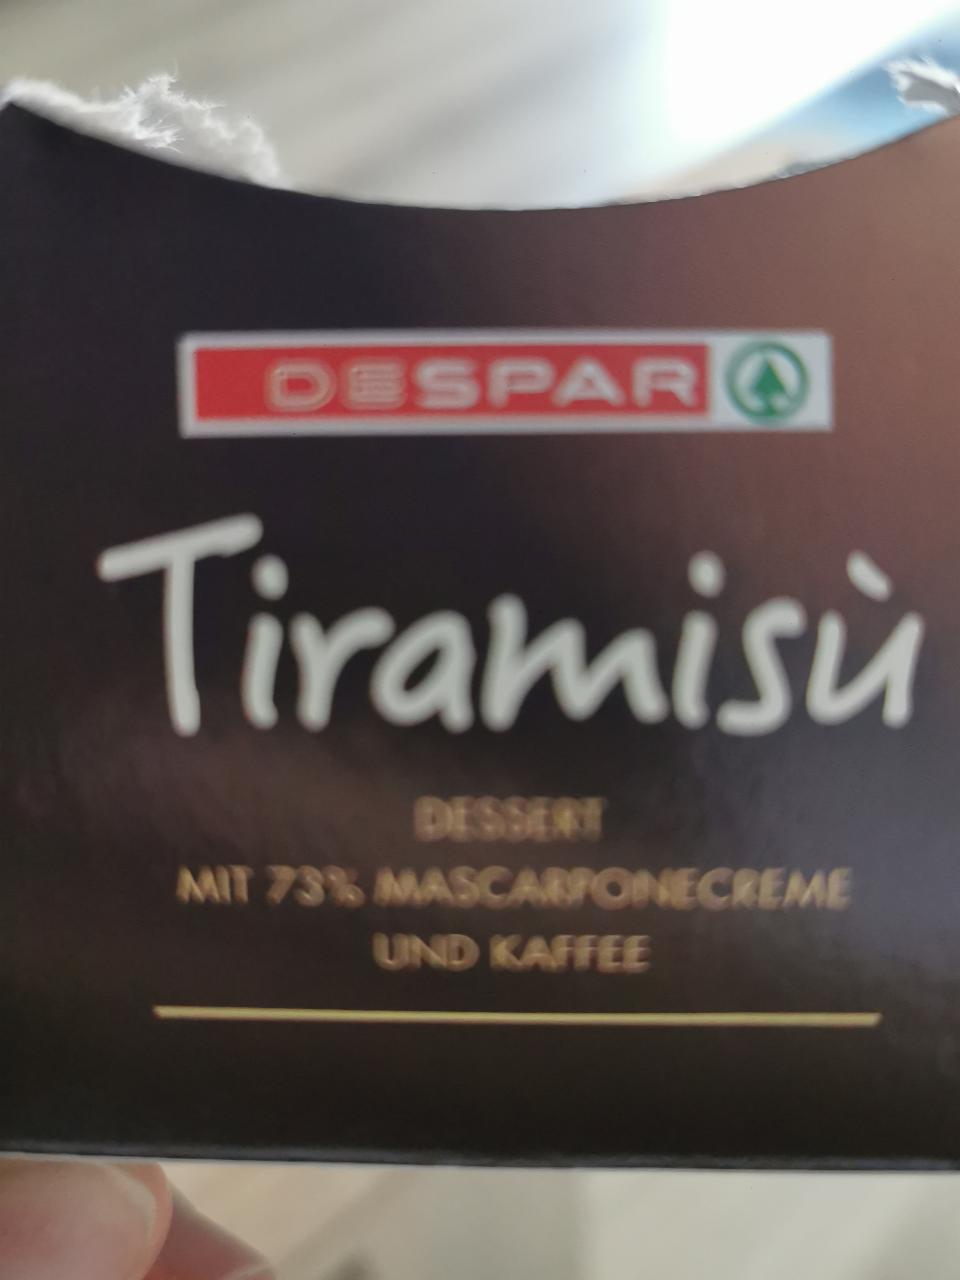 Fotografie - Tiramisu dessert mit 73% mascarponecreme und kaffee